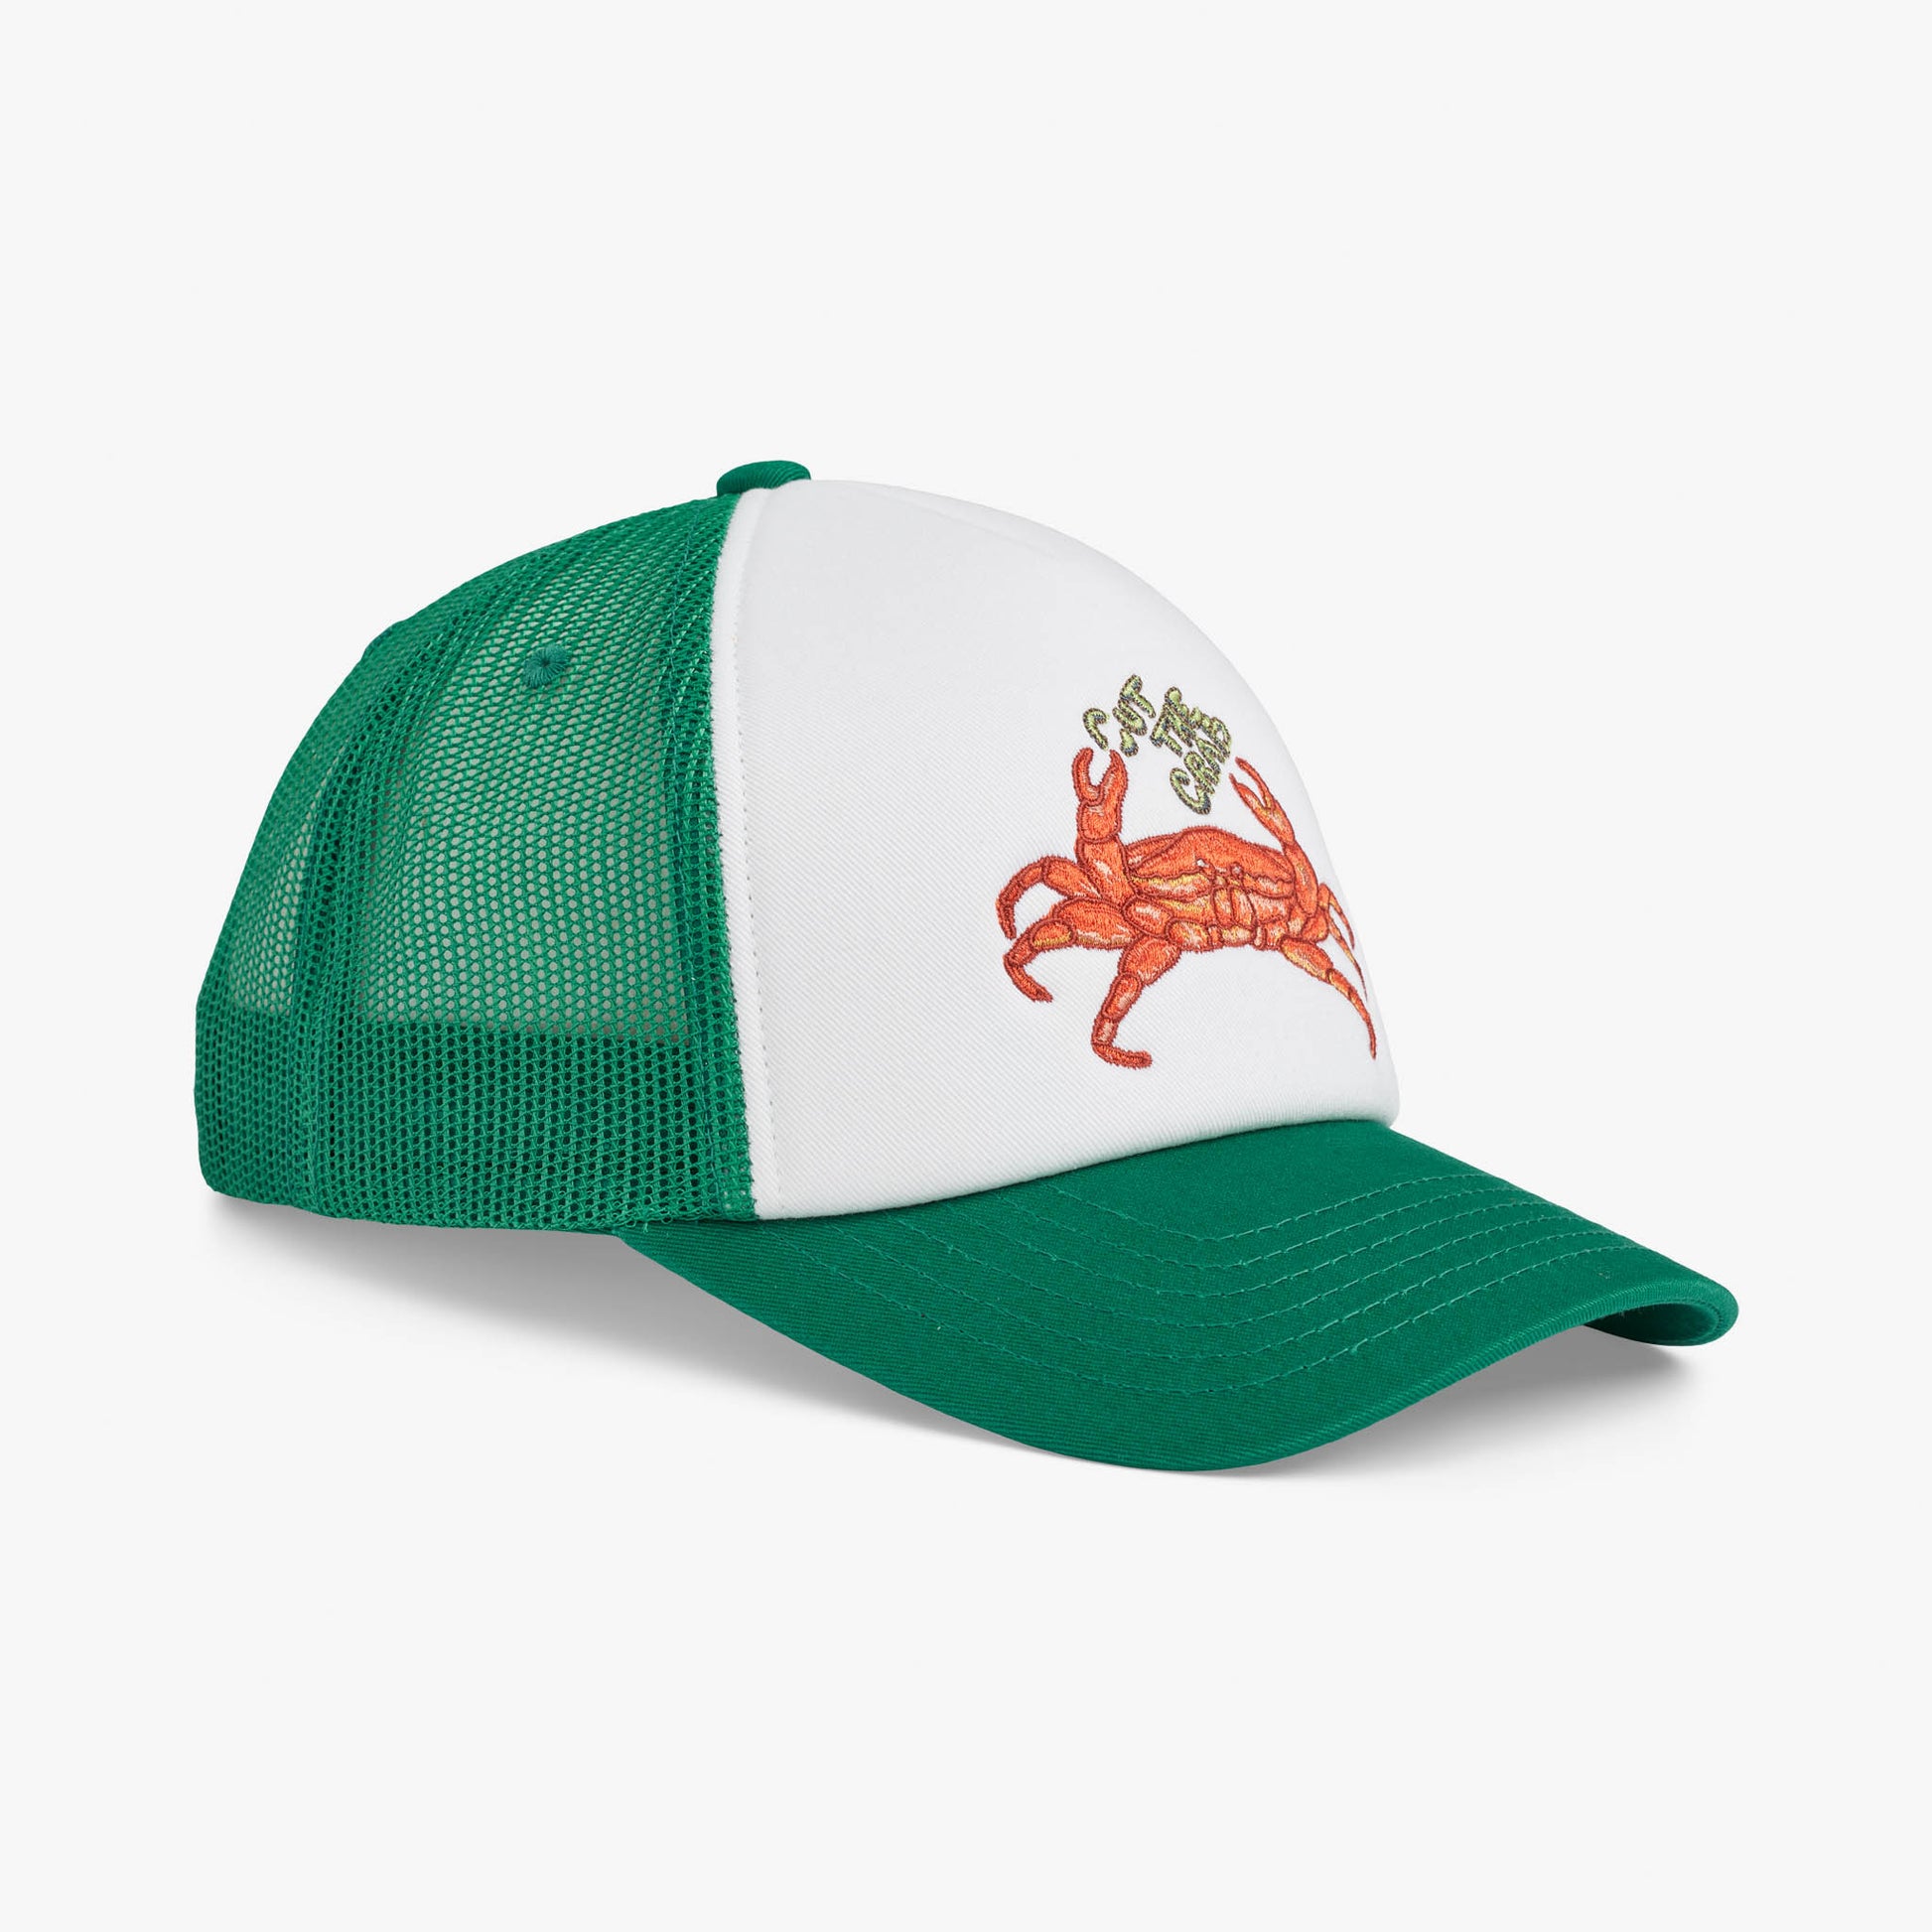 Upfront Nordic Headwear - Crab A-Shape Trucker Cap - Medium Green - Headz Up 